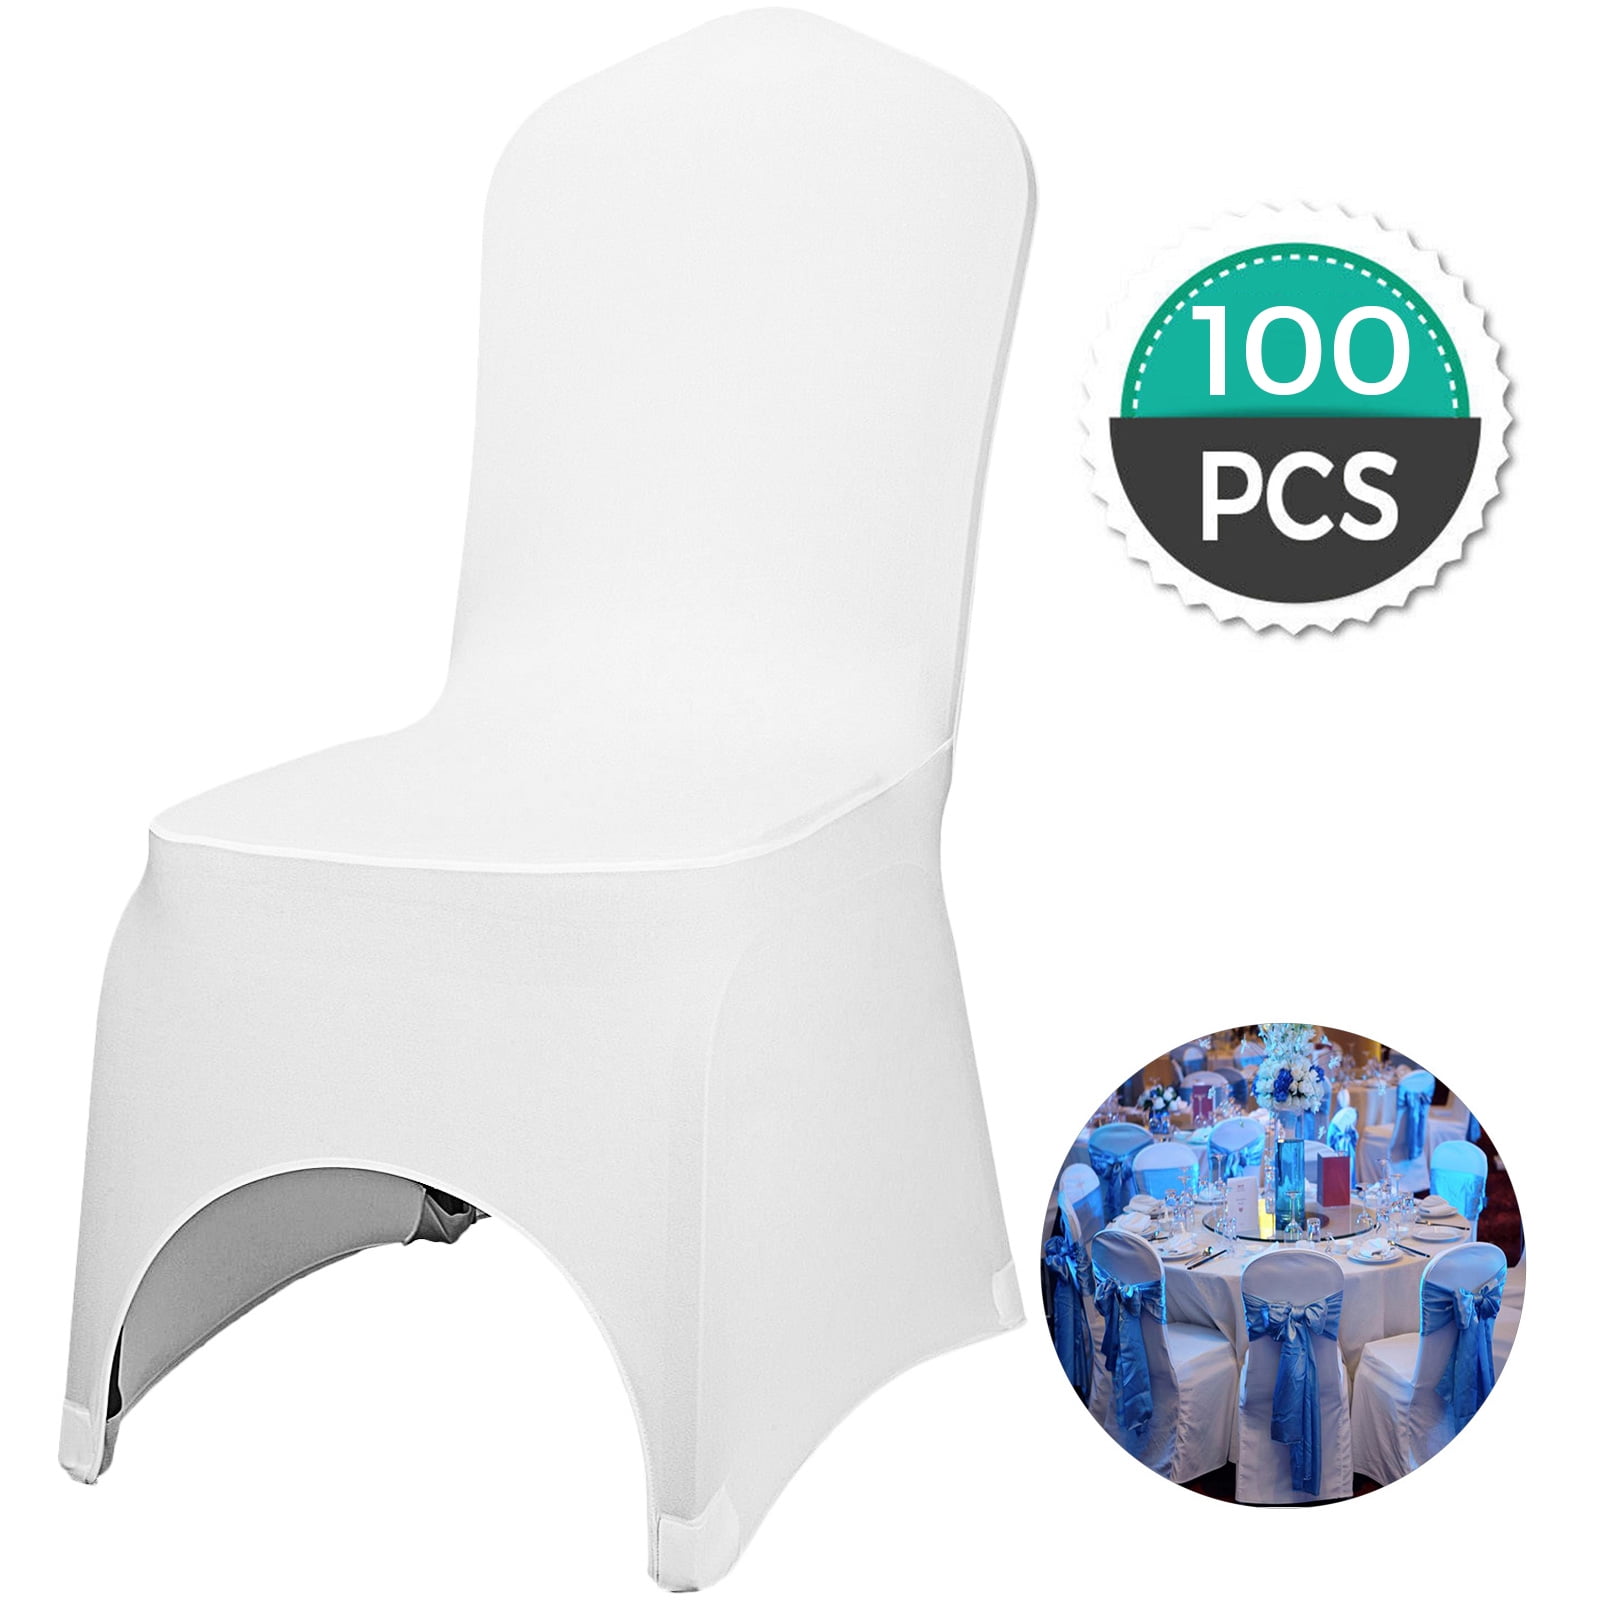  AlGaiety Spandex Chair Cover,100PCS,Chair Covers